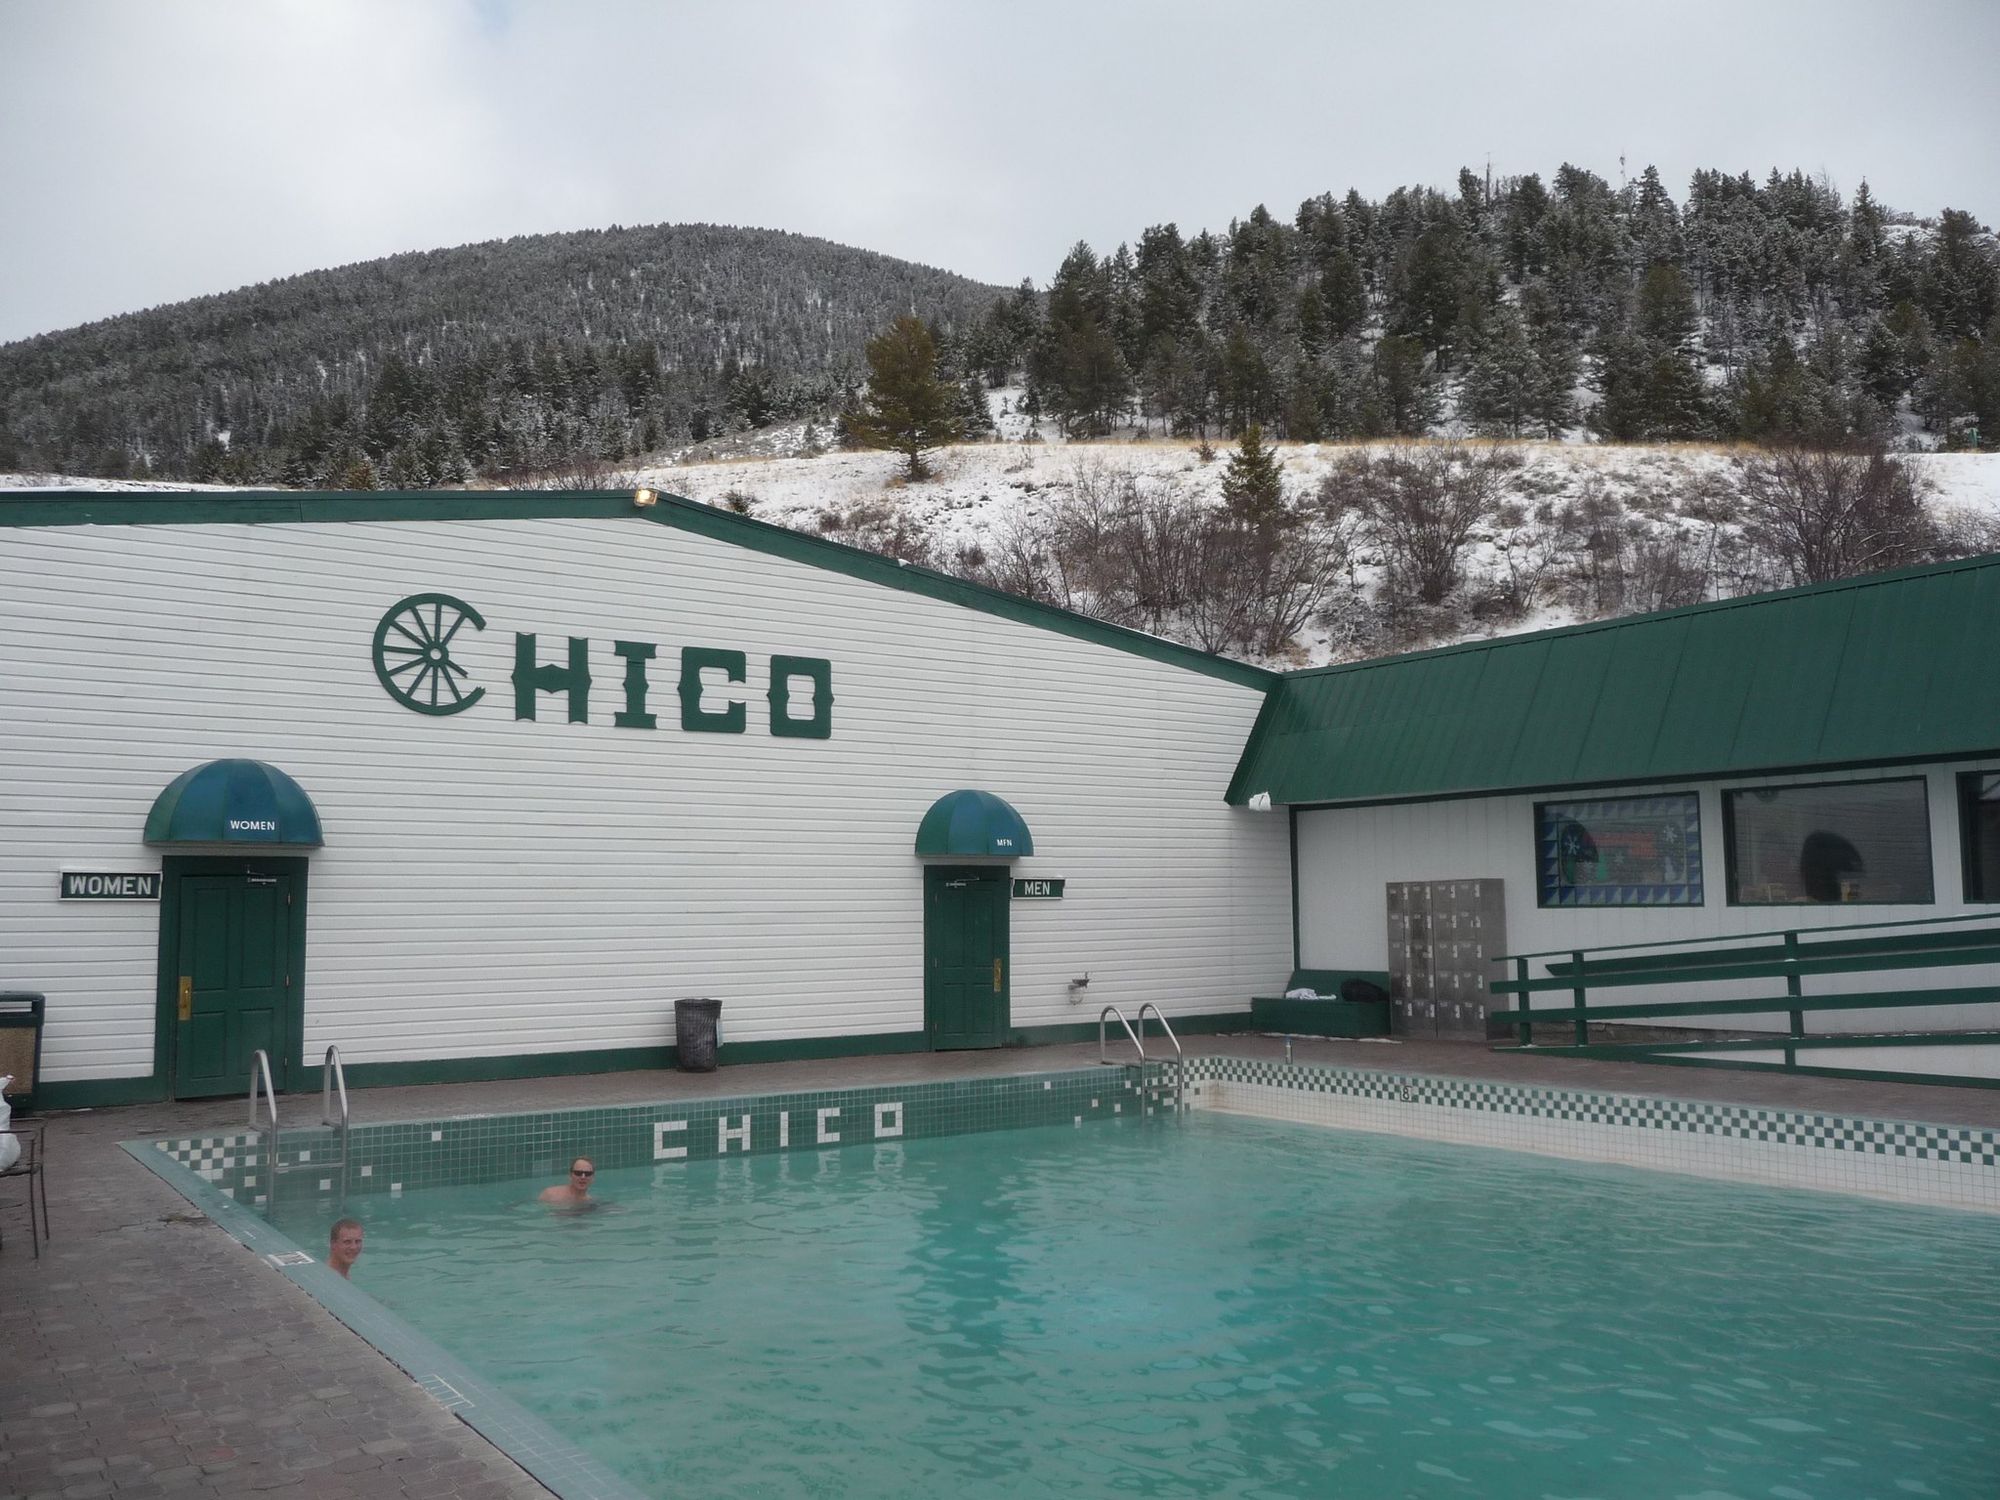 Montana Hot Springs